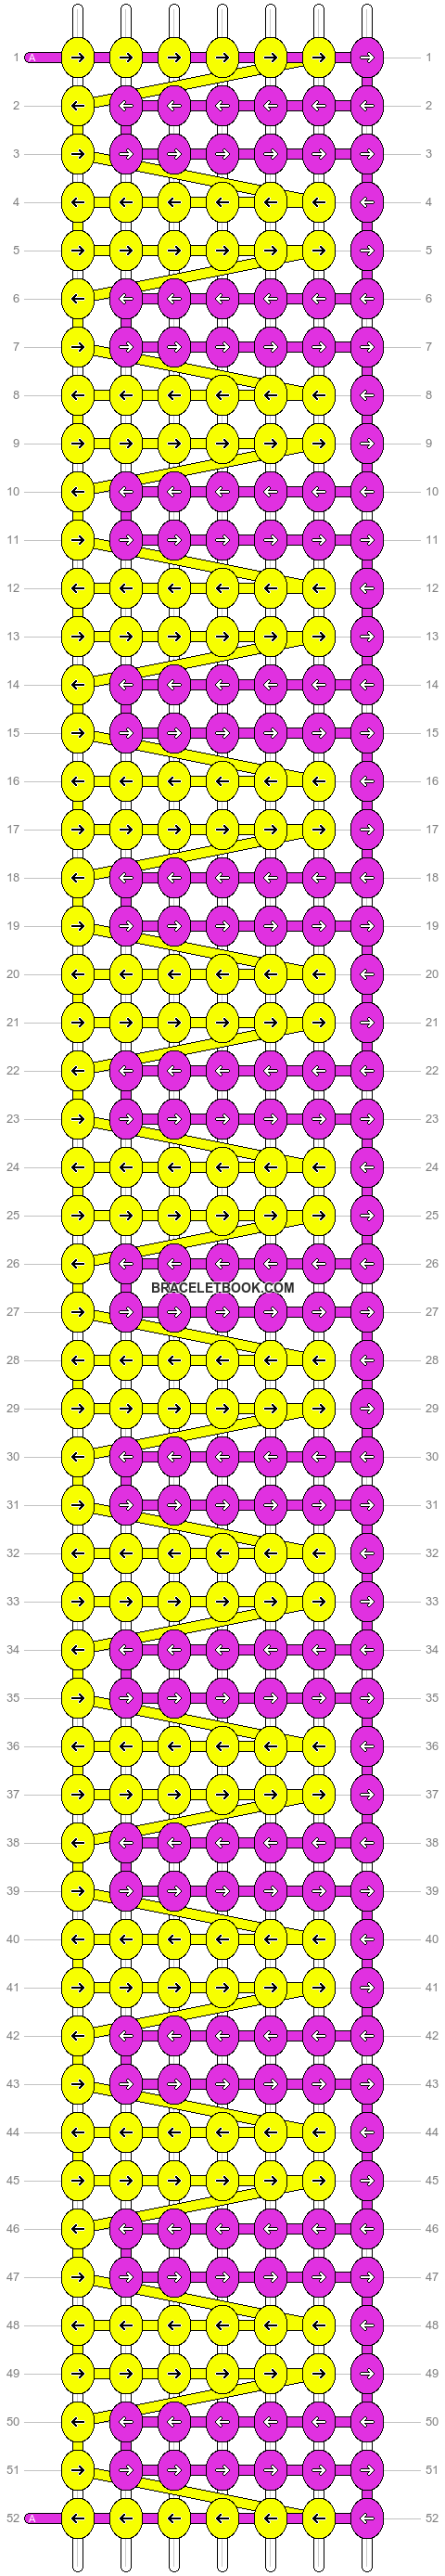 Alpha pattern #15234 variation #95133 pattern